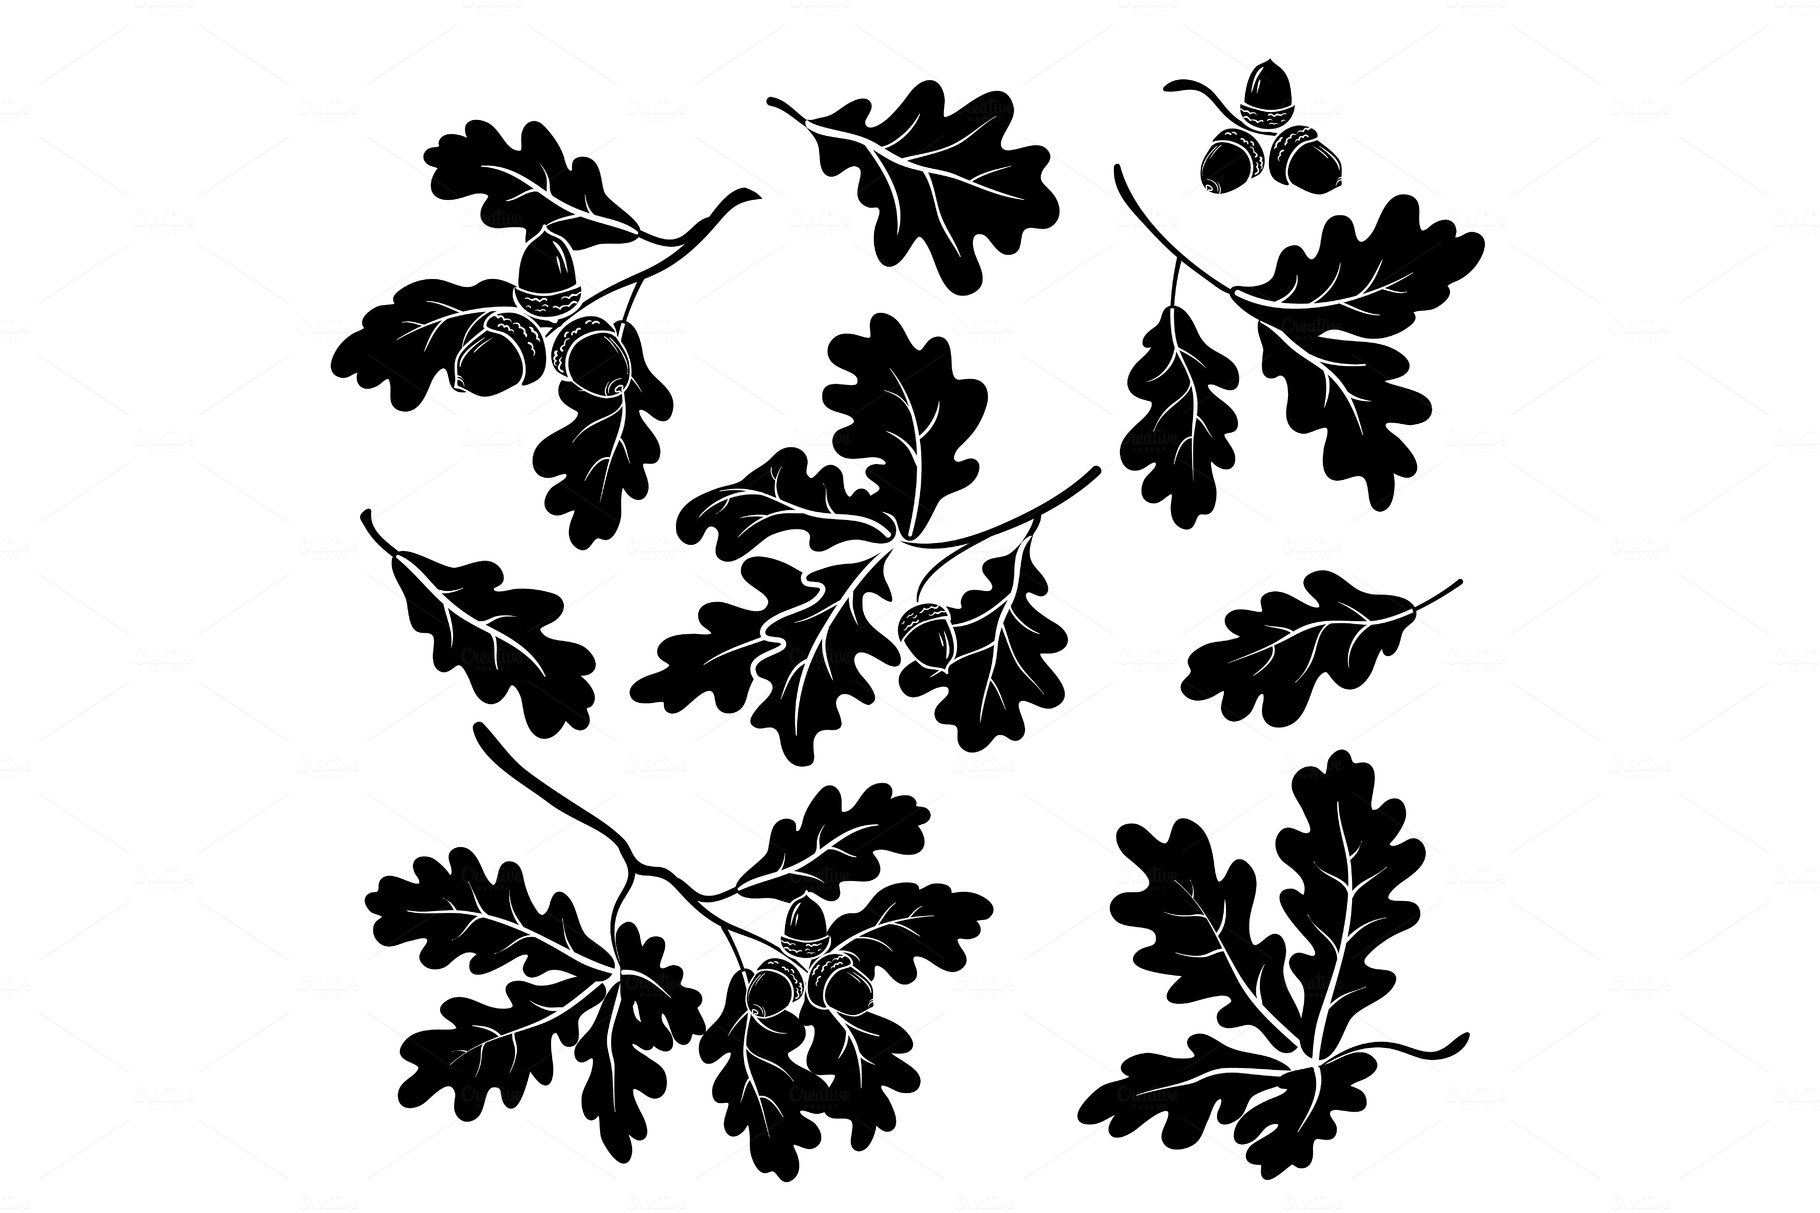 Set of black and white oak leaves.